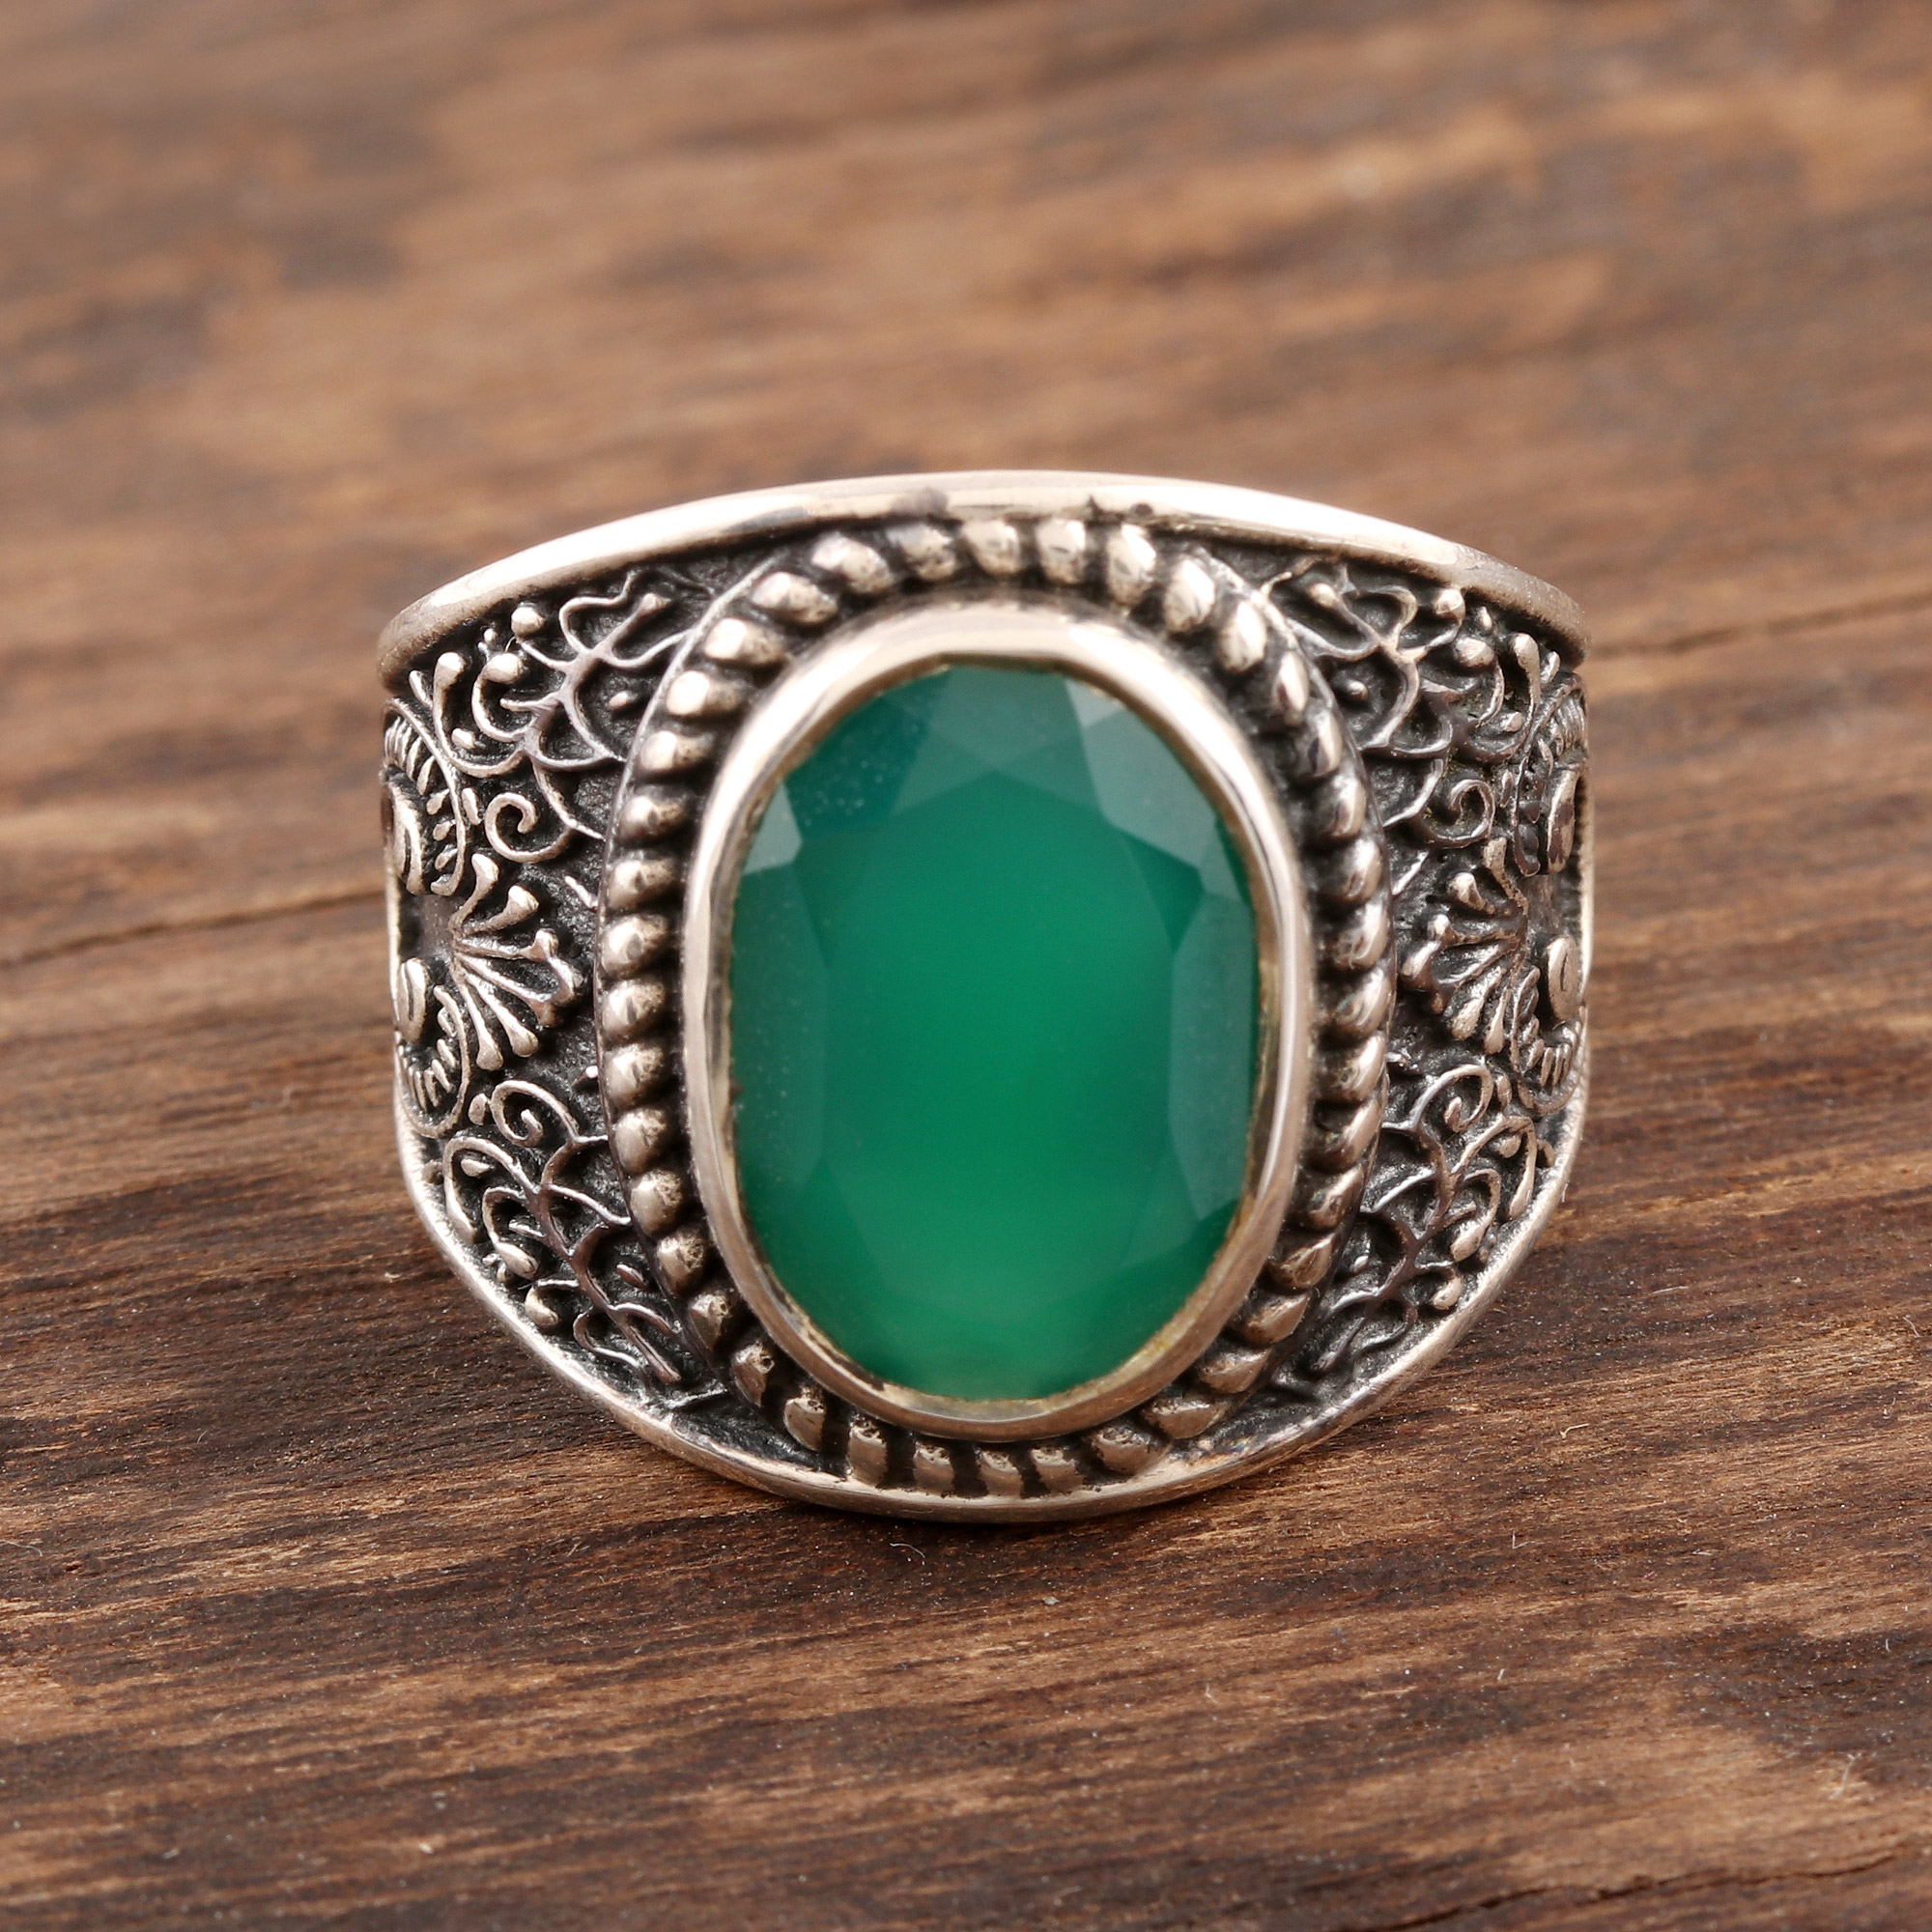 6-Carat Men's Green Onyx Ring from India - Elite Green | NOVICA